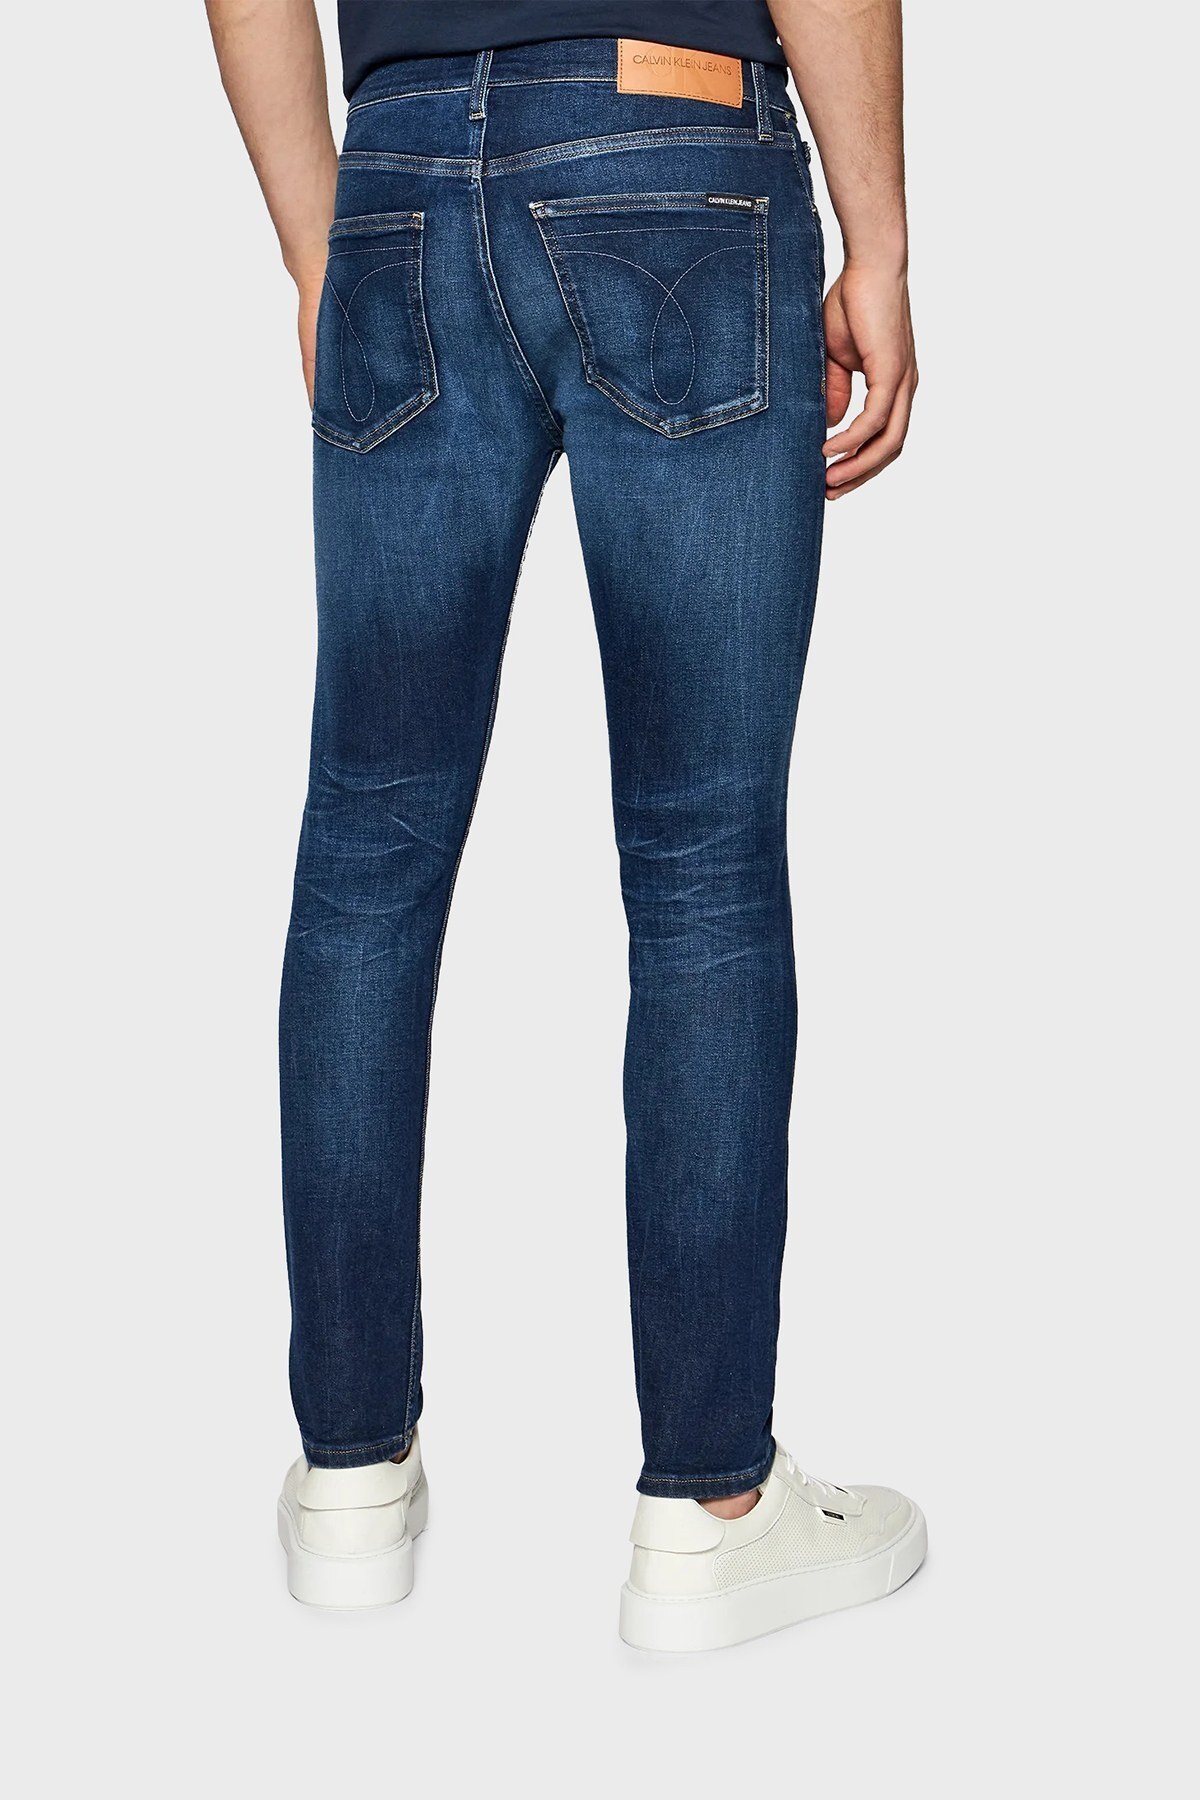 Calvin Klein Skinny Fit Düşük Bel Dar Paça Pamuklu Jeans Erkek Kot Pantolon J30J317658 1BJ LACİVERT